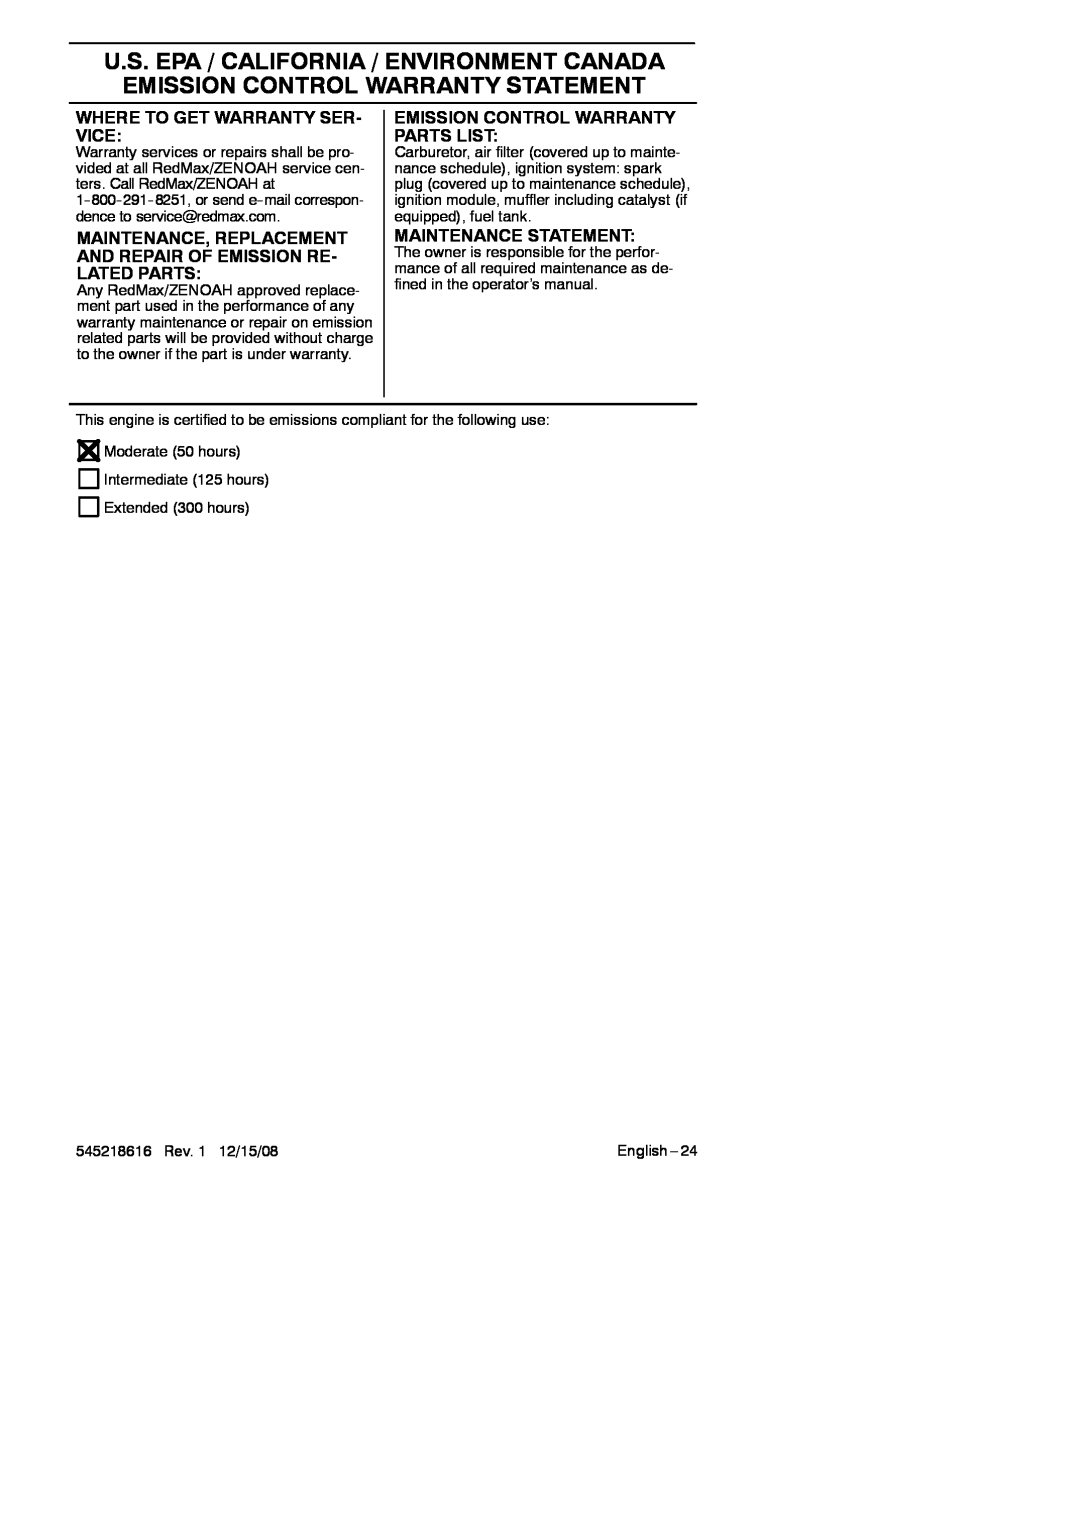 RedMax HB280 manual Where To Get Warranty Ser- Vice, Emission Control Warranty Parts List, Maintenance Statement 